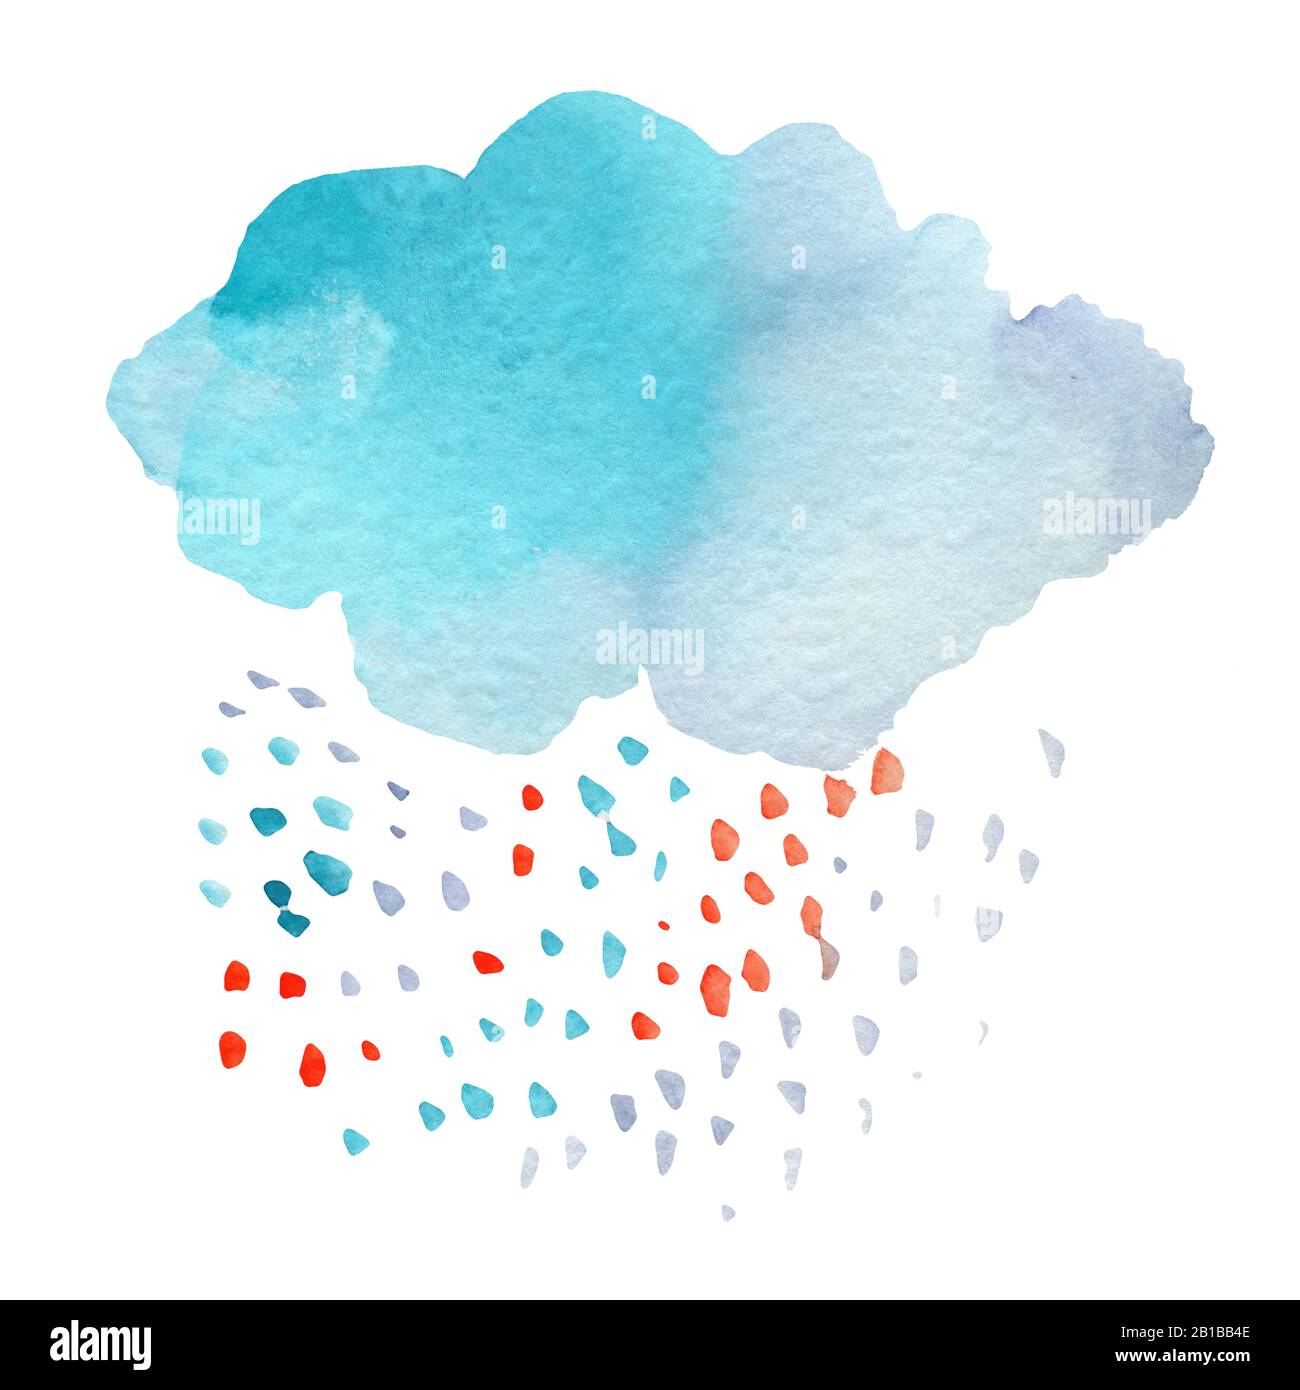 Cute watercoor Cloud with Colorful Rain Drops. Scandinavian illustration. Stock Photo